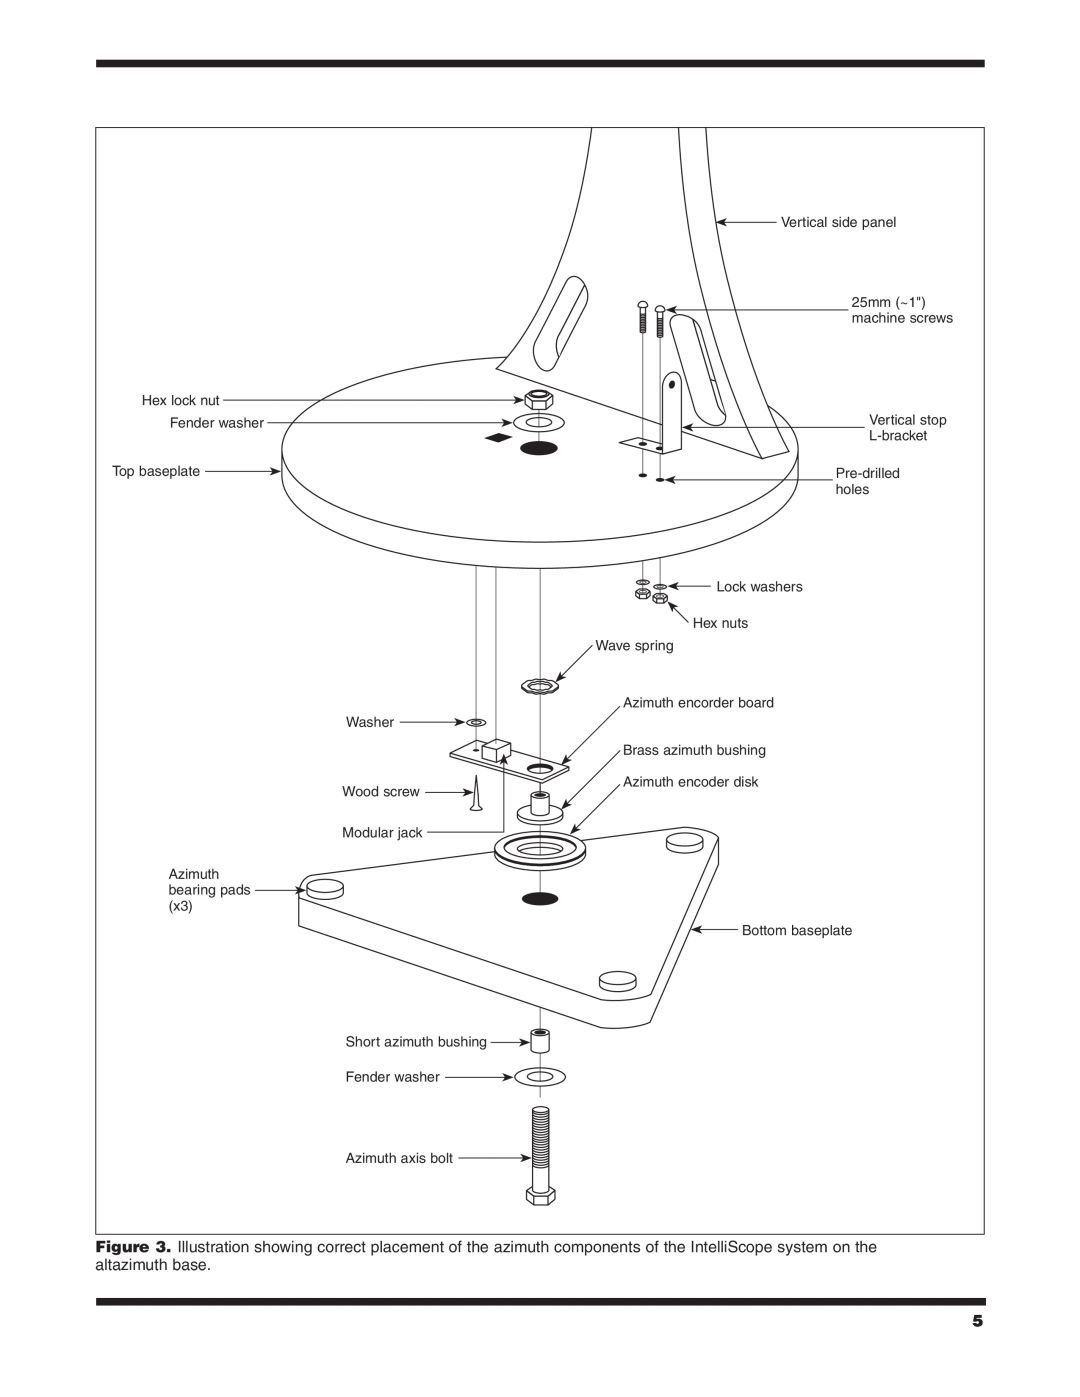 Orion 6/6I instruction manual Hex lock nut Fender washer Top baseplate Washer 